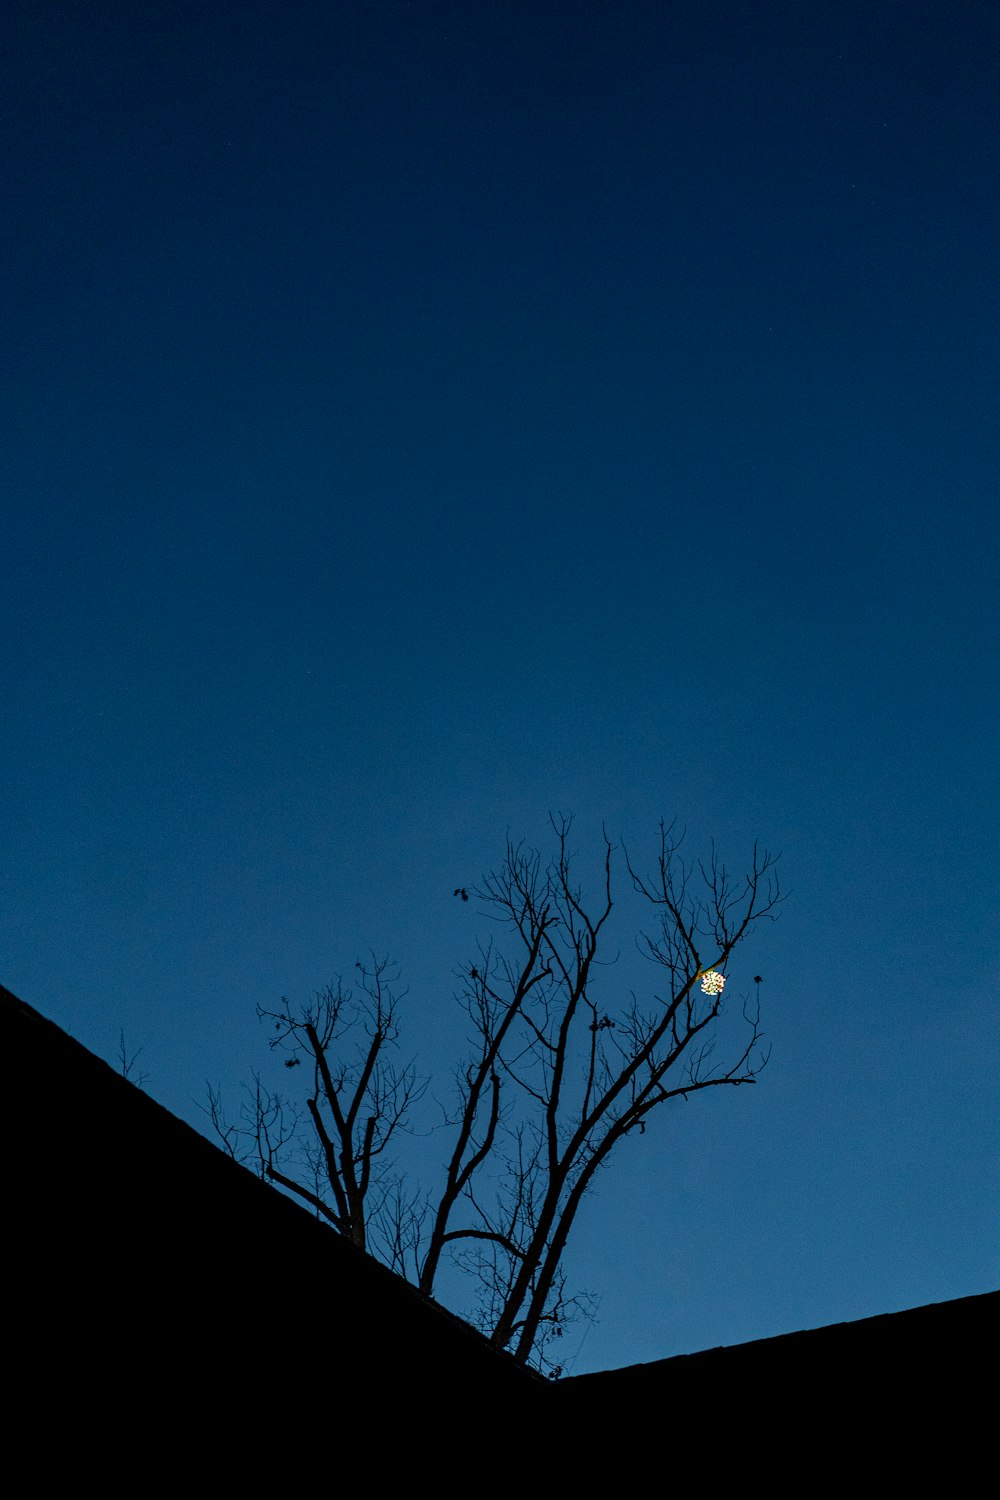 bare tree under blue sky during daytime